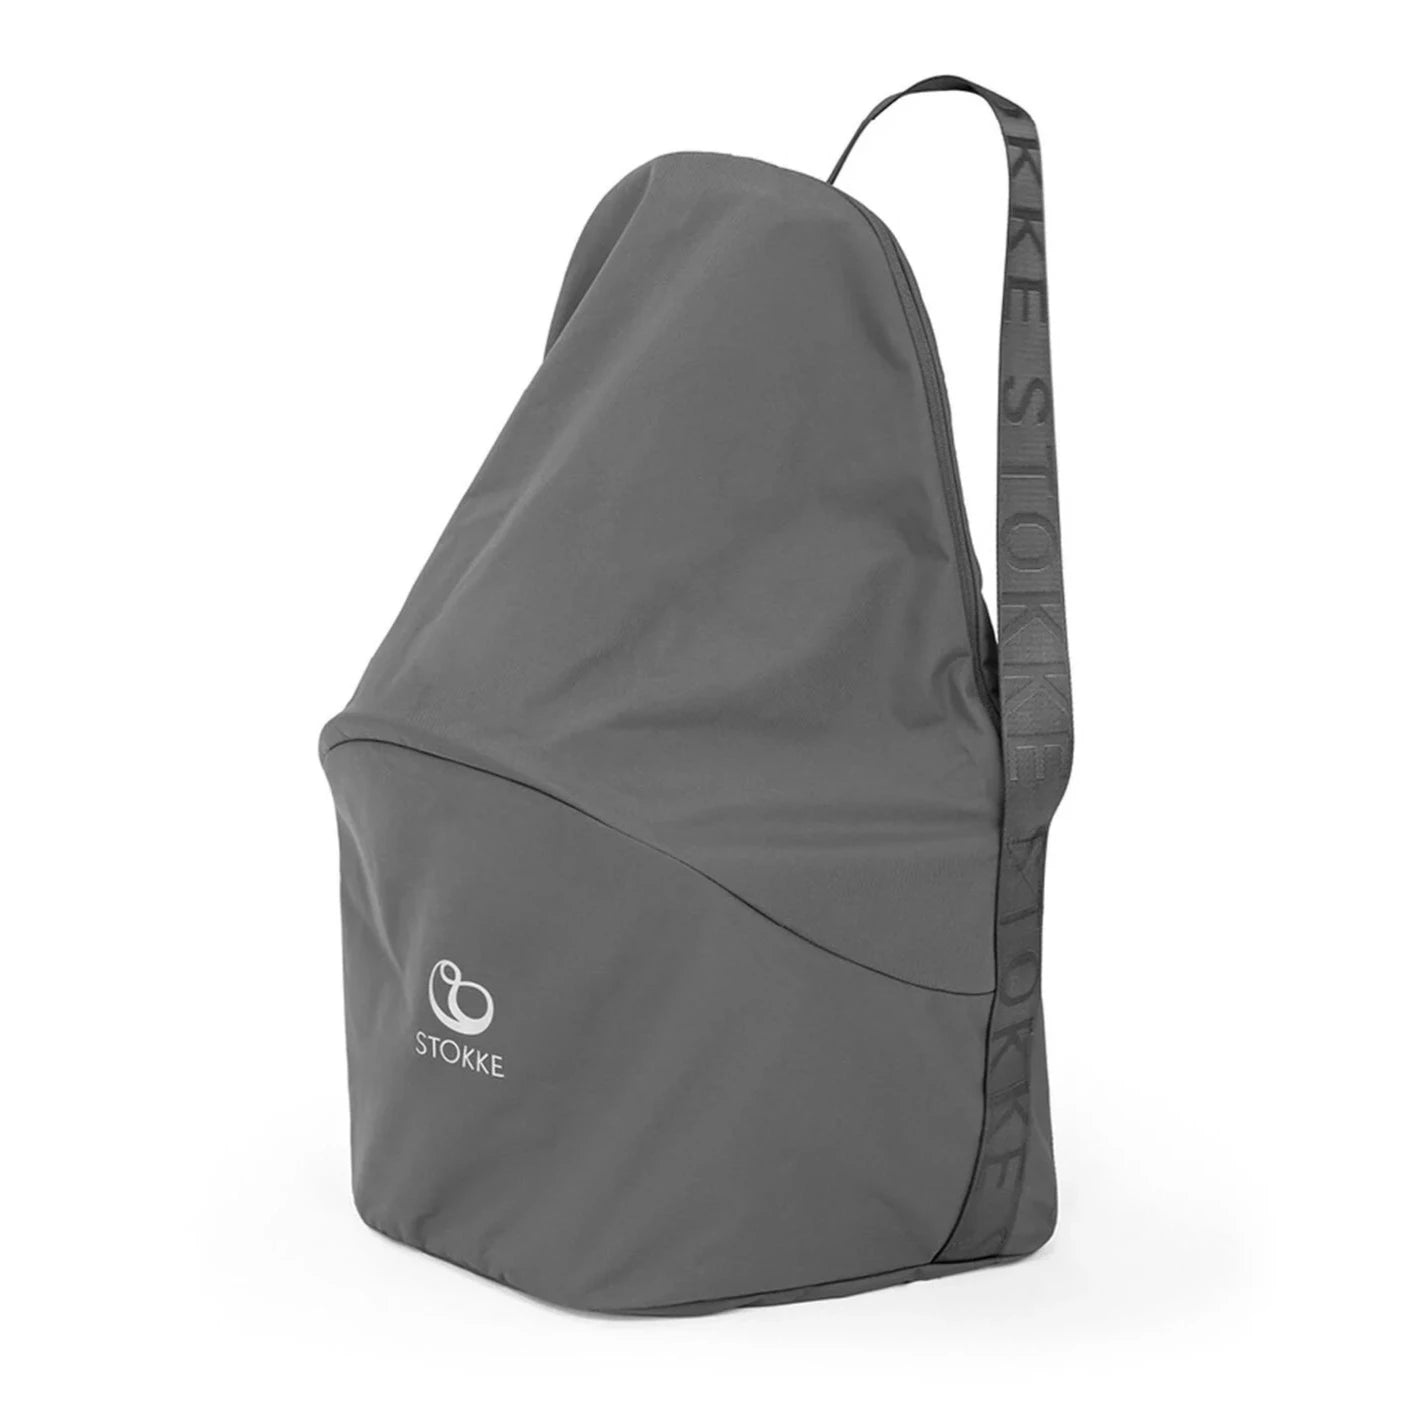 Stokke Clikk Travel Bag (Dark Grey)